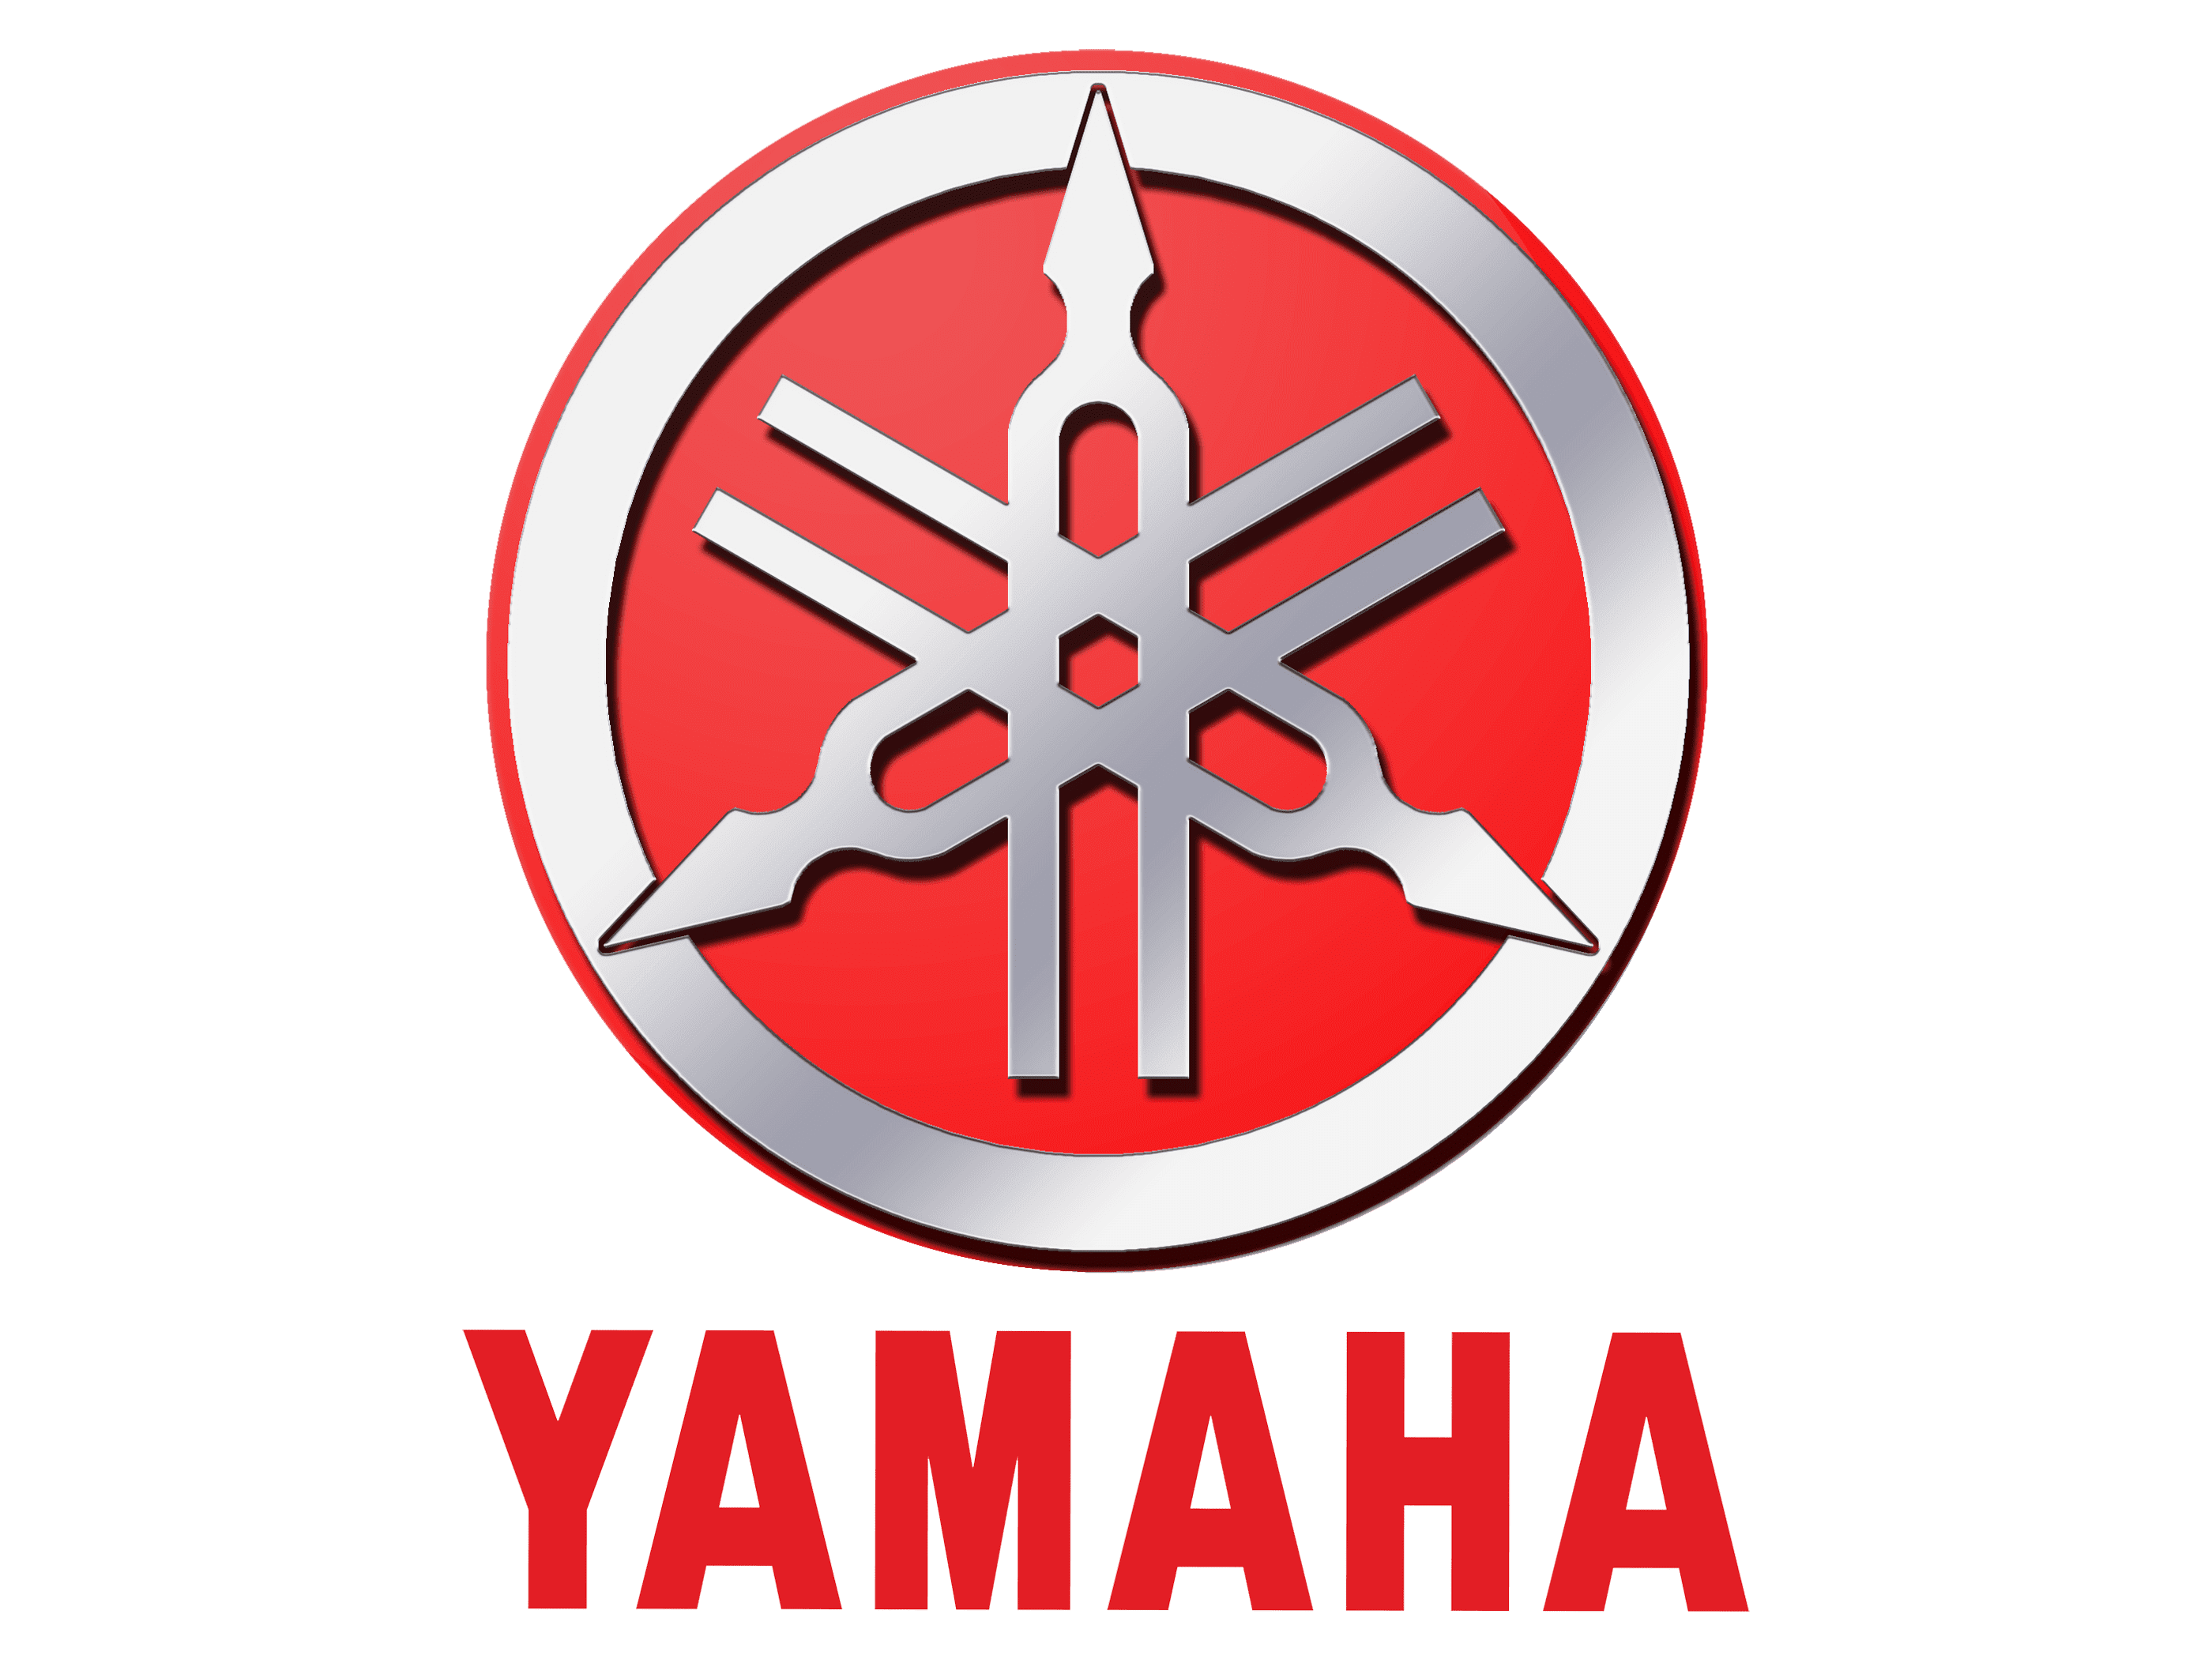 Yamaha Motor Co Ltd. Japan